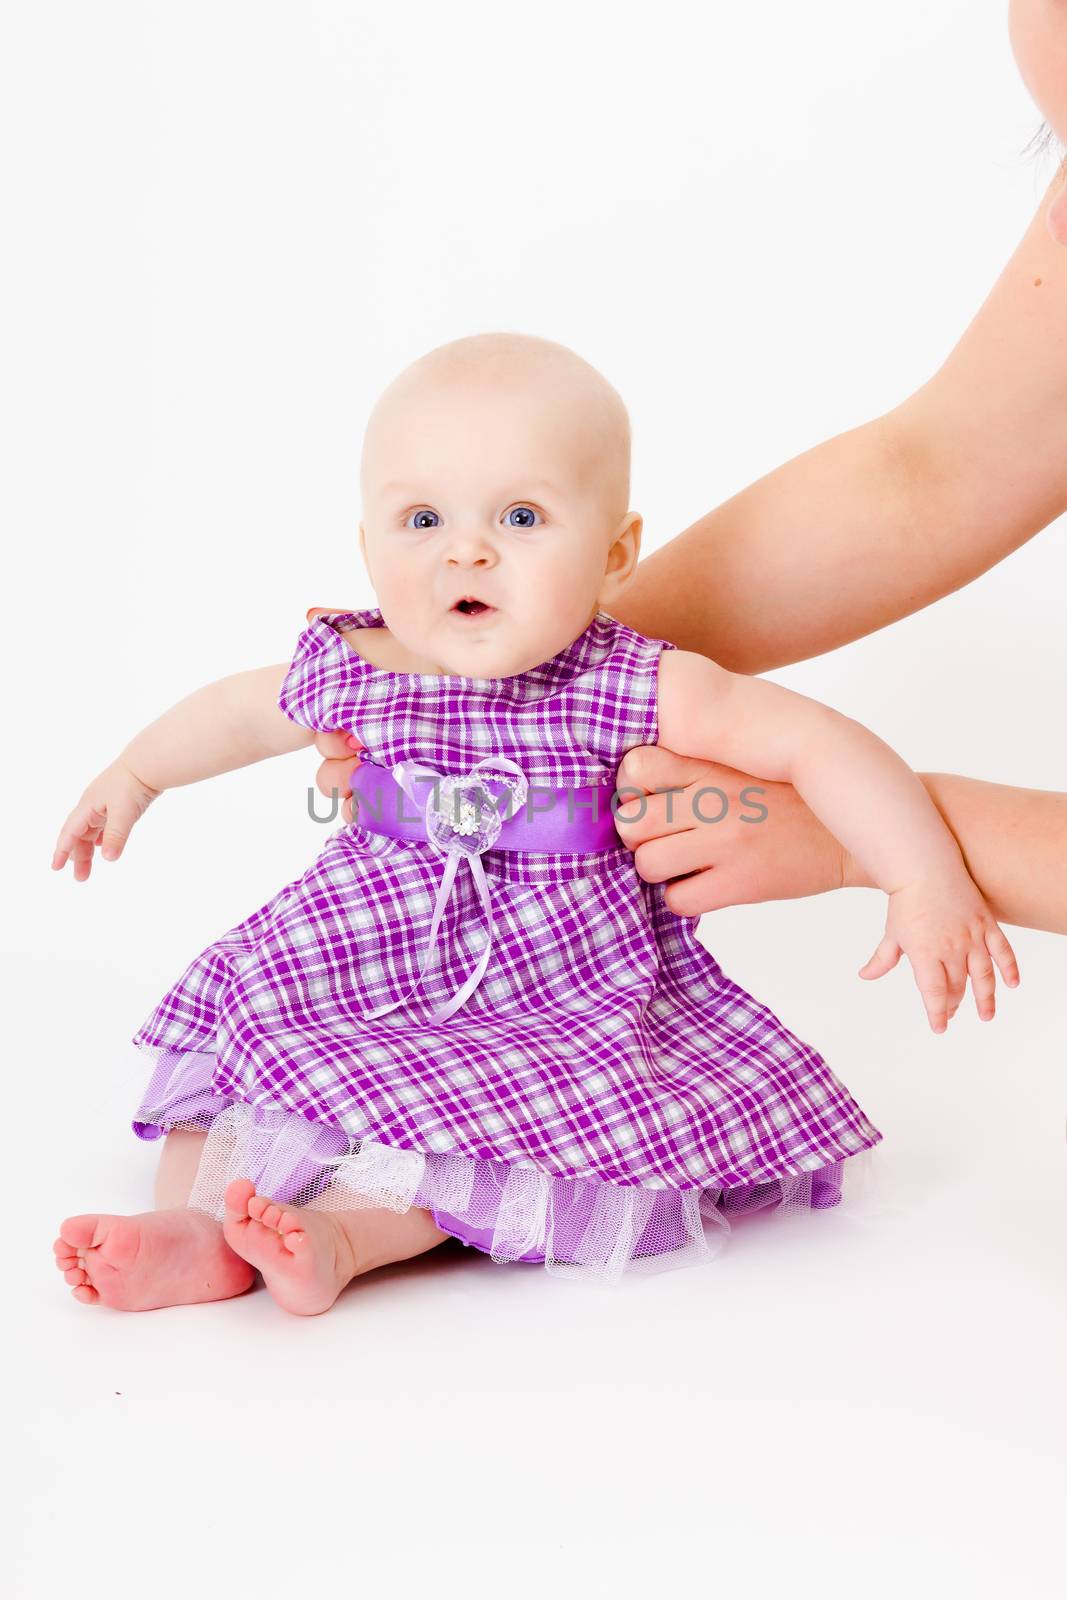 baby girl in a dress. studio photo